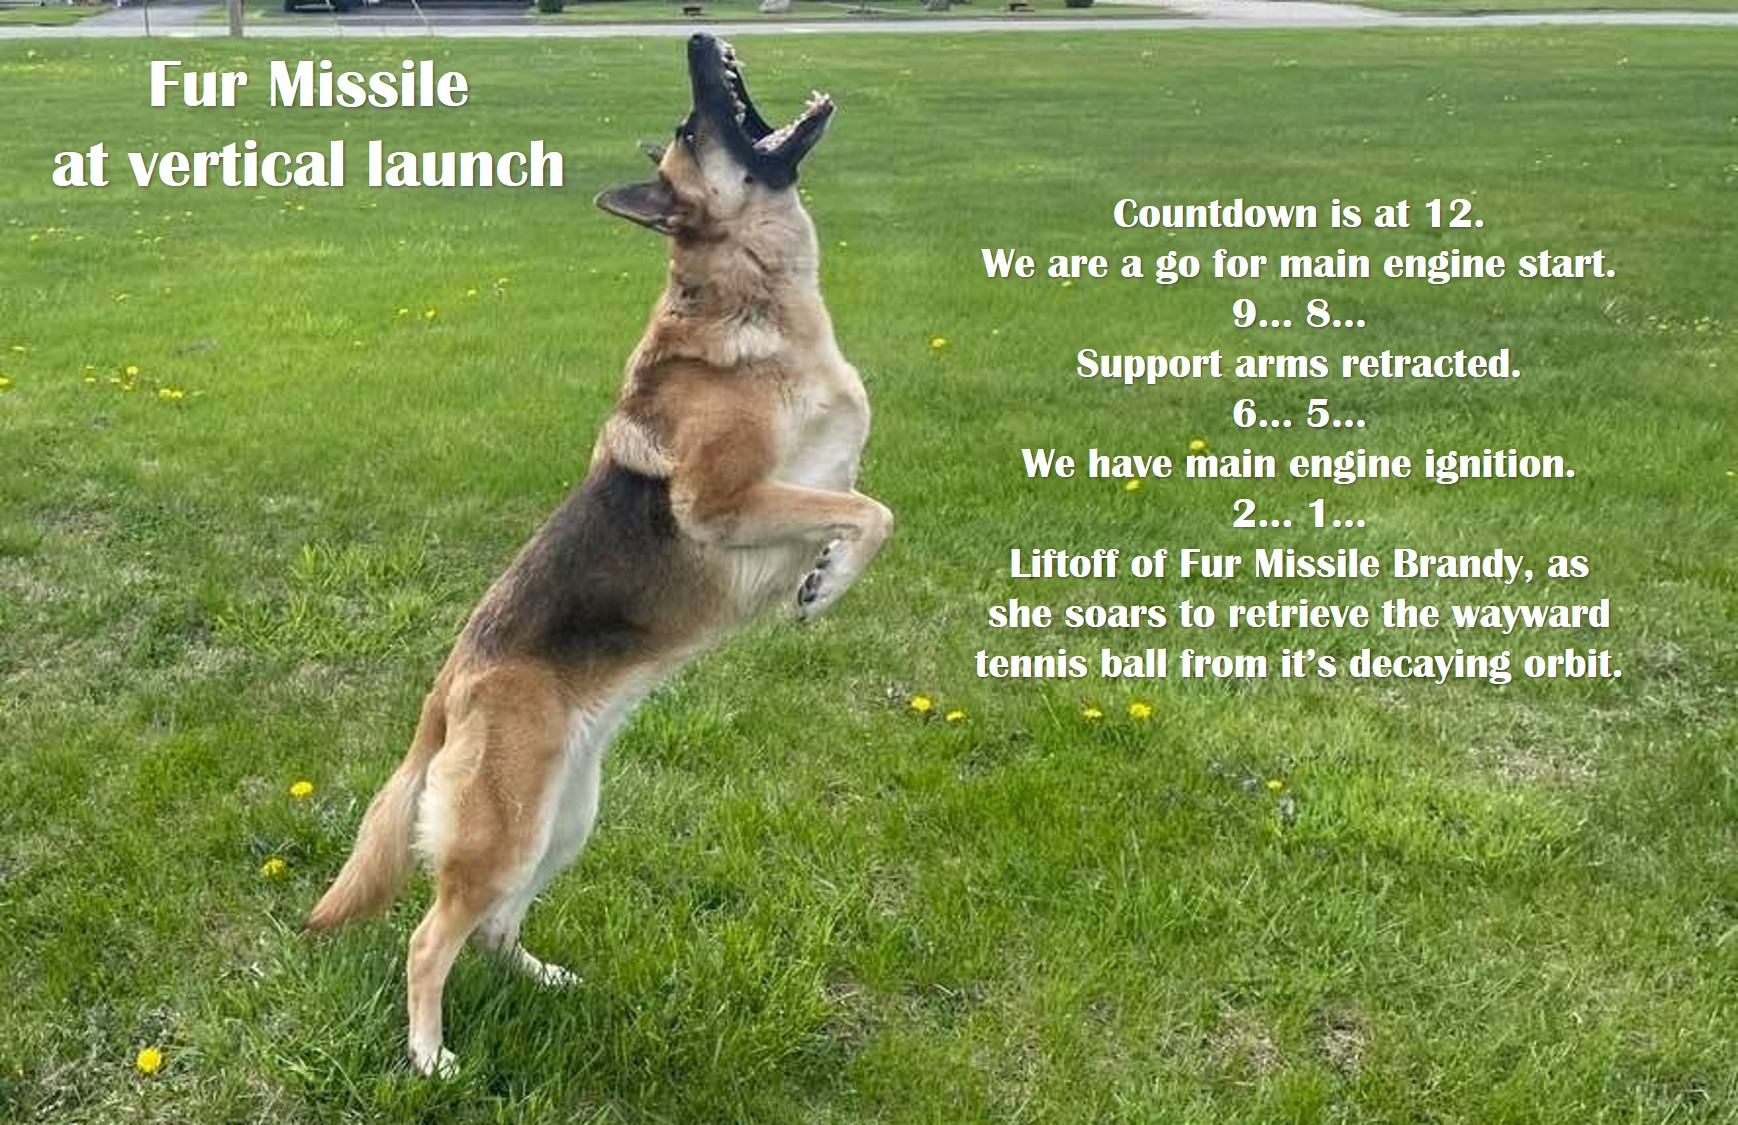 Fur Missile Brandy at launch.jpg